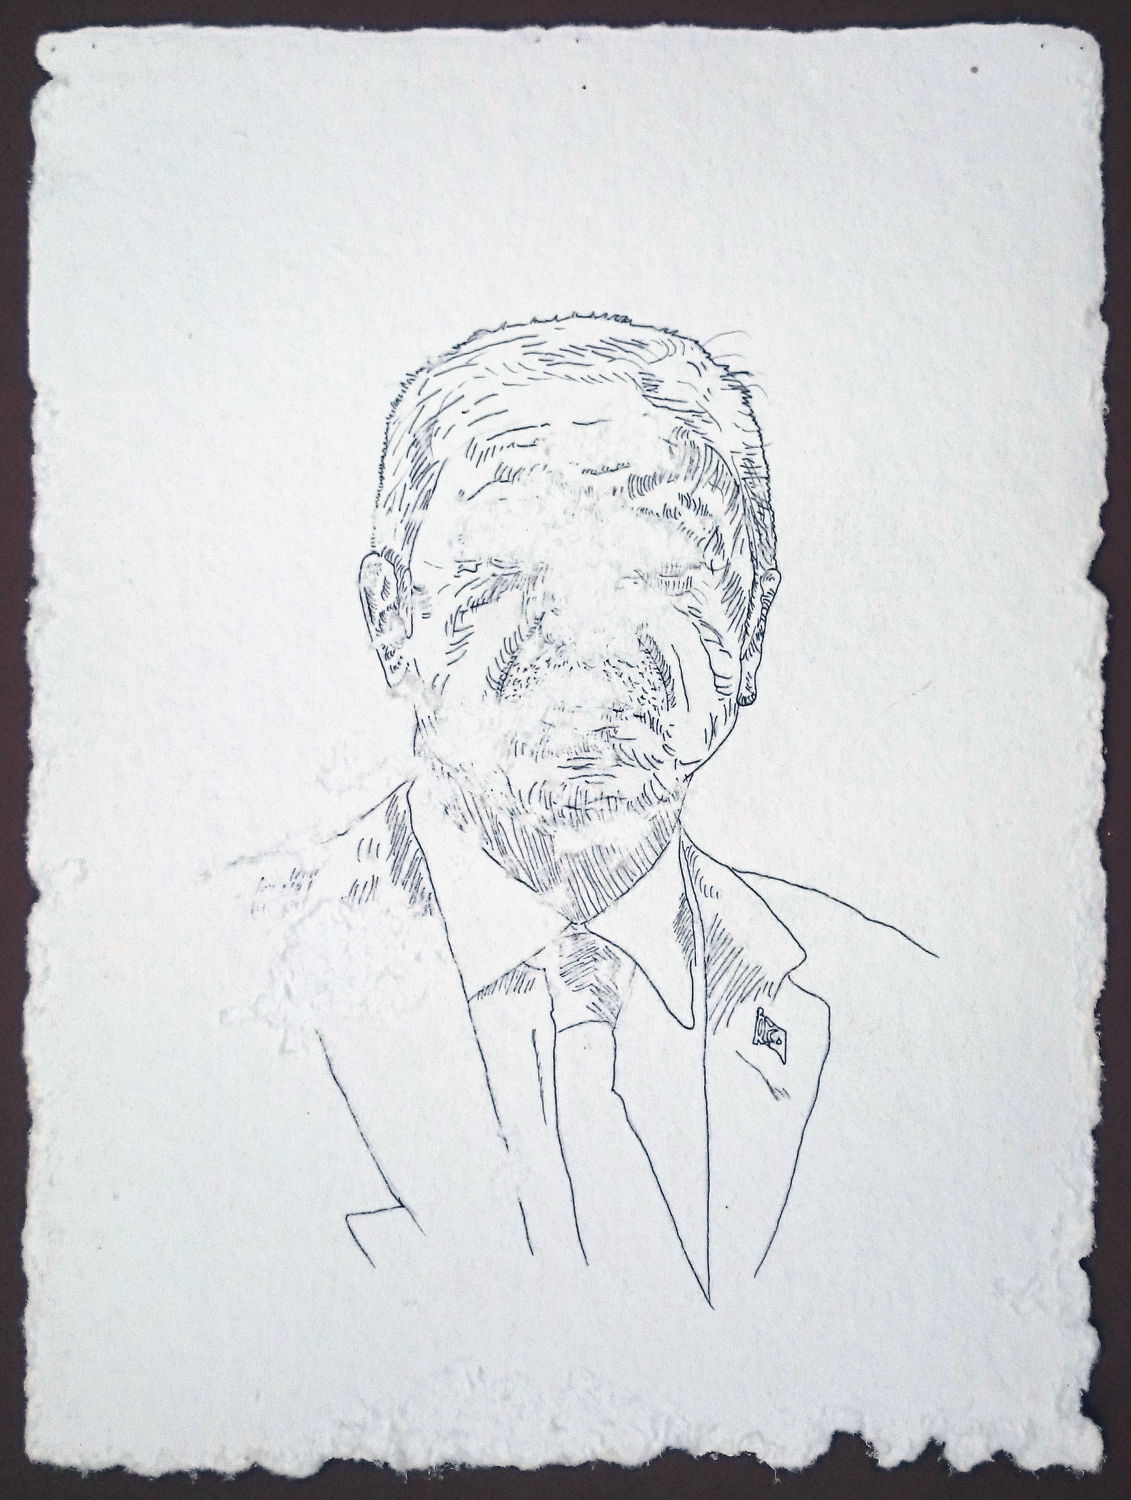 Recep Tayyip Erdoğan, honeybees interaction / ink on handmade paper, cca 39x40 cm, 2016